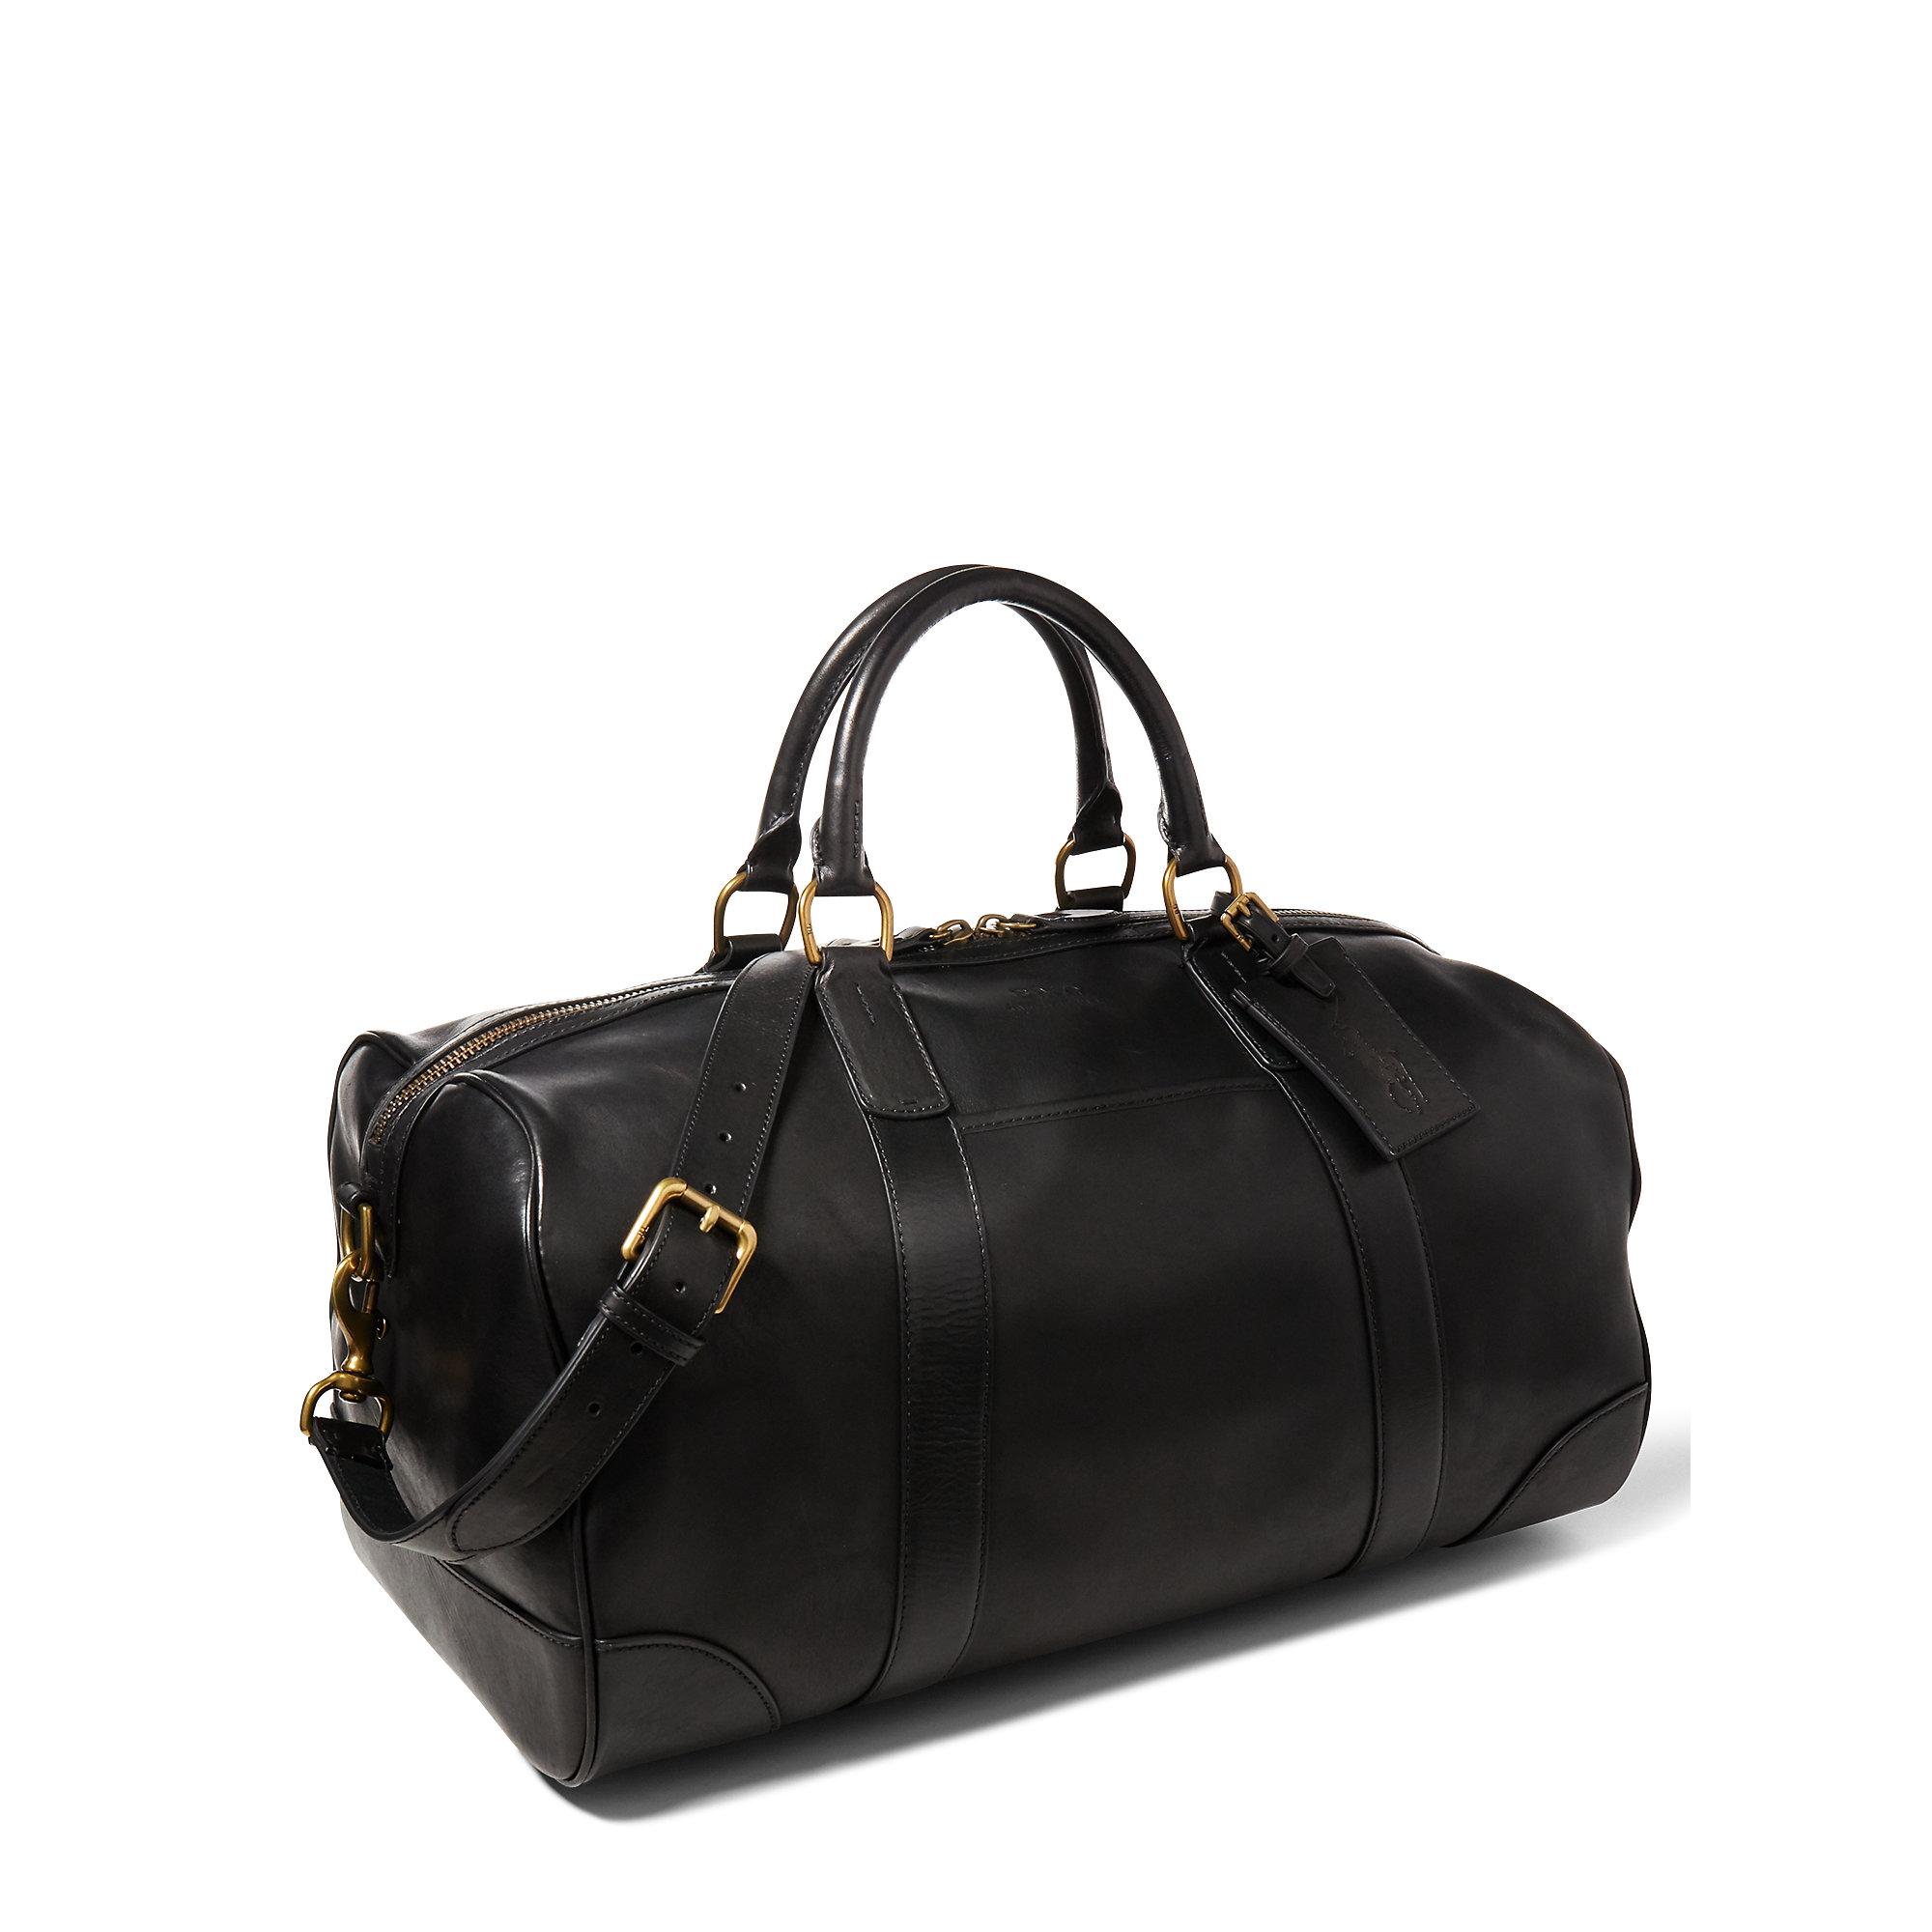 Lyst - Polo Ralph Lauren Leather Duffel Bag in Black for Men